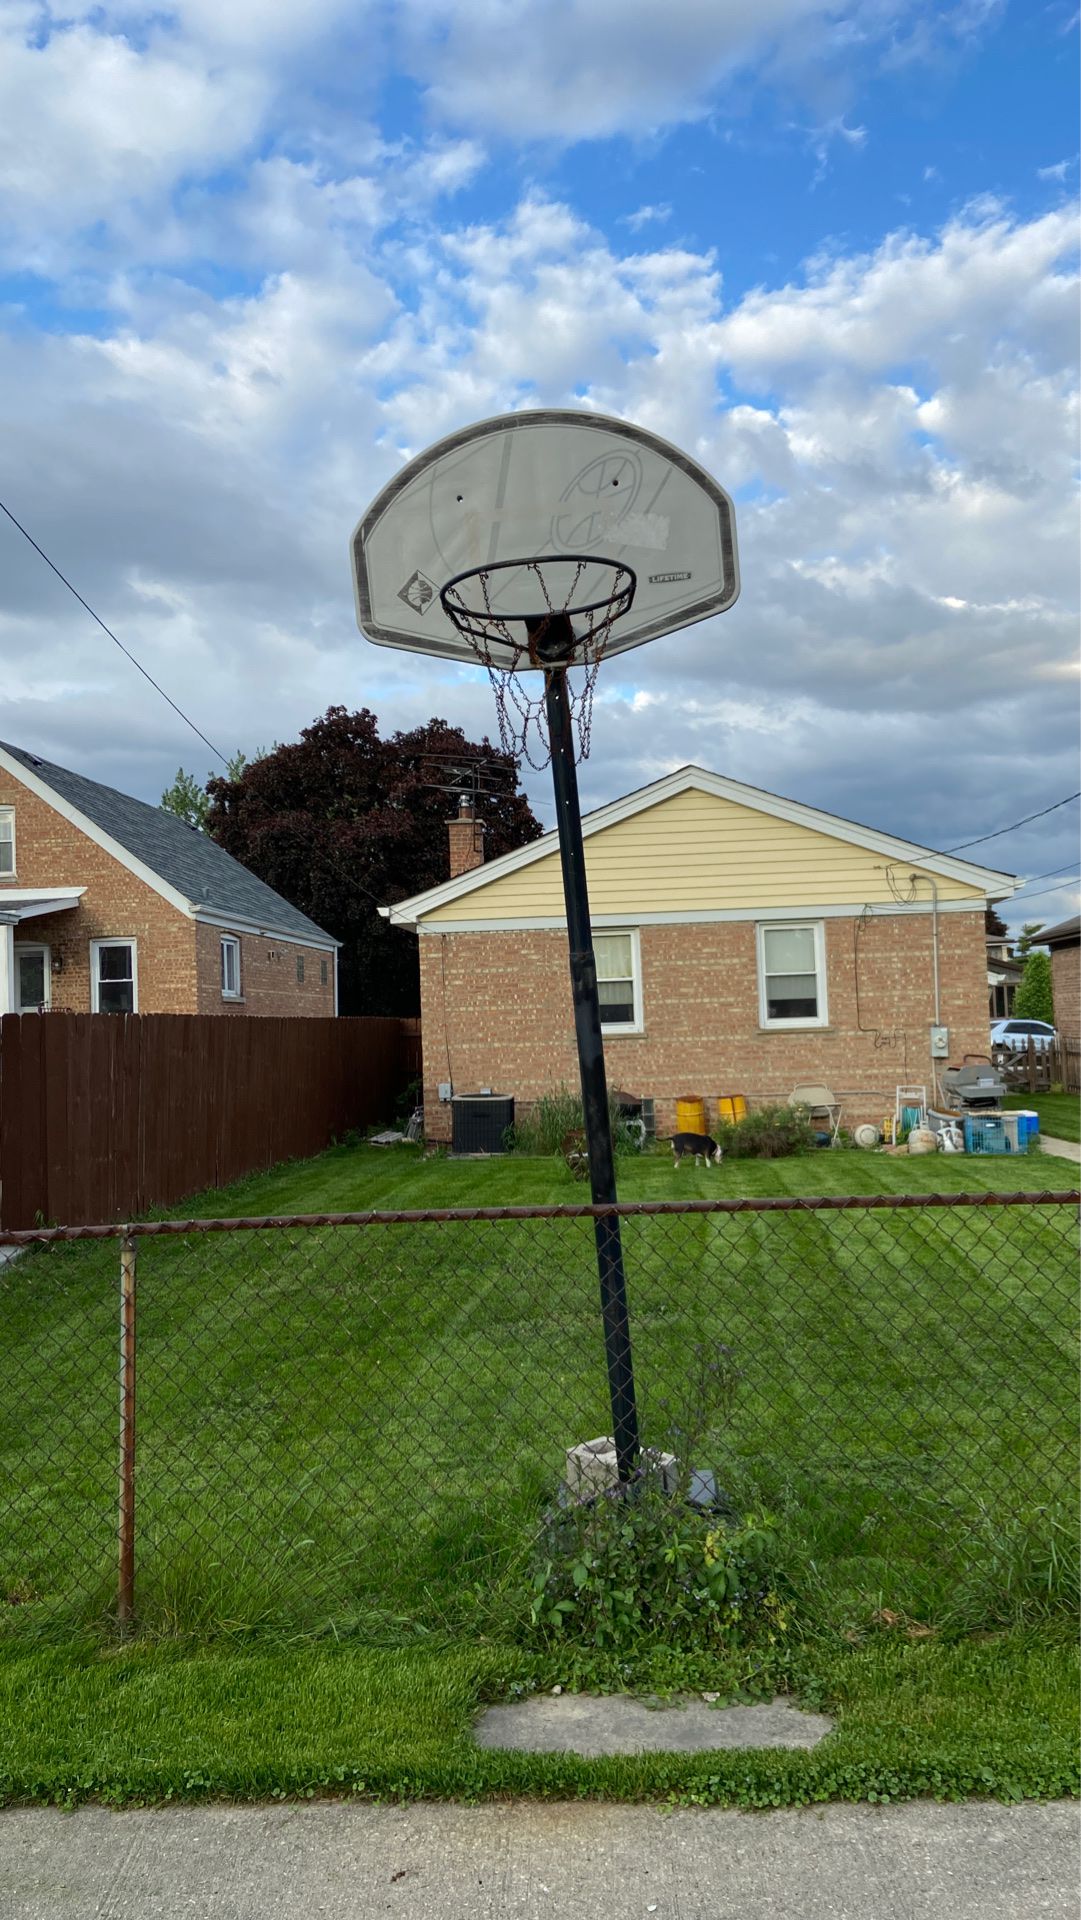 Basketball hoop for sale 70$ obo